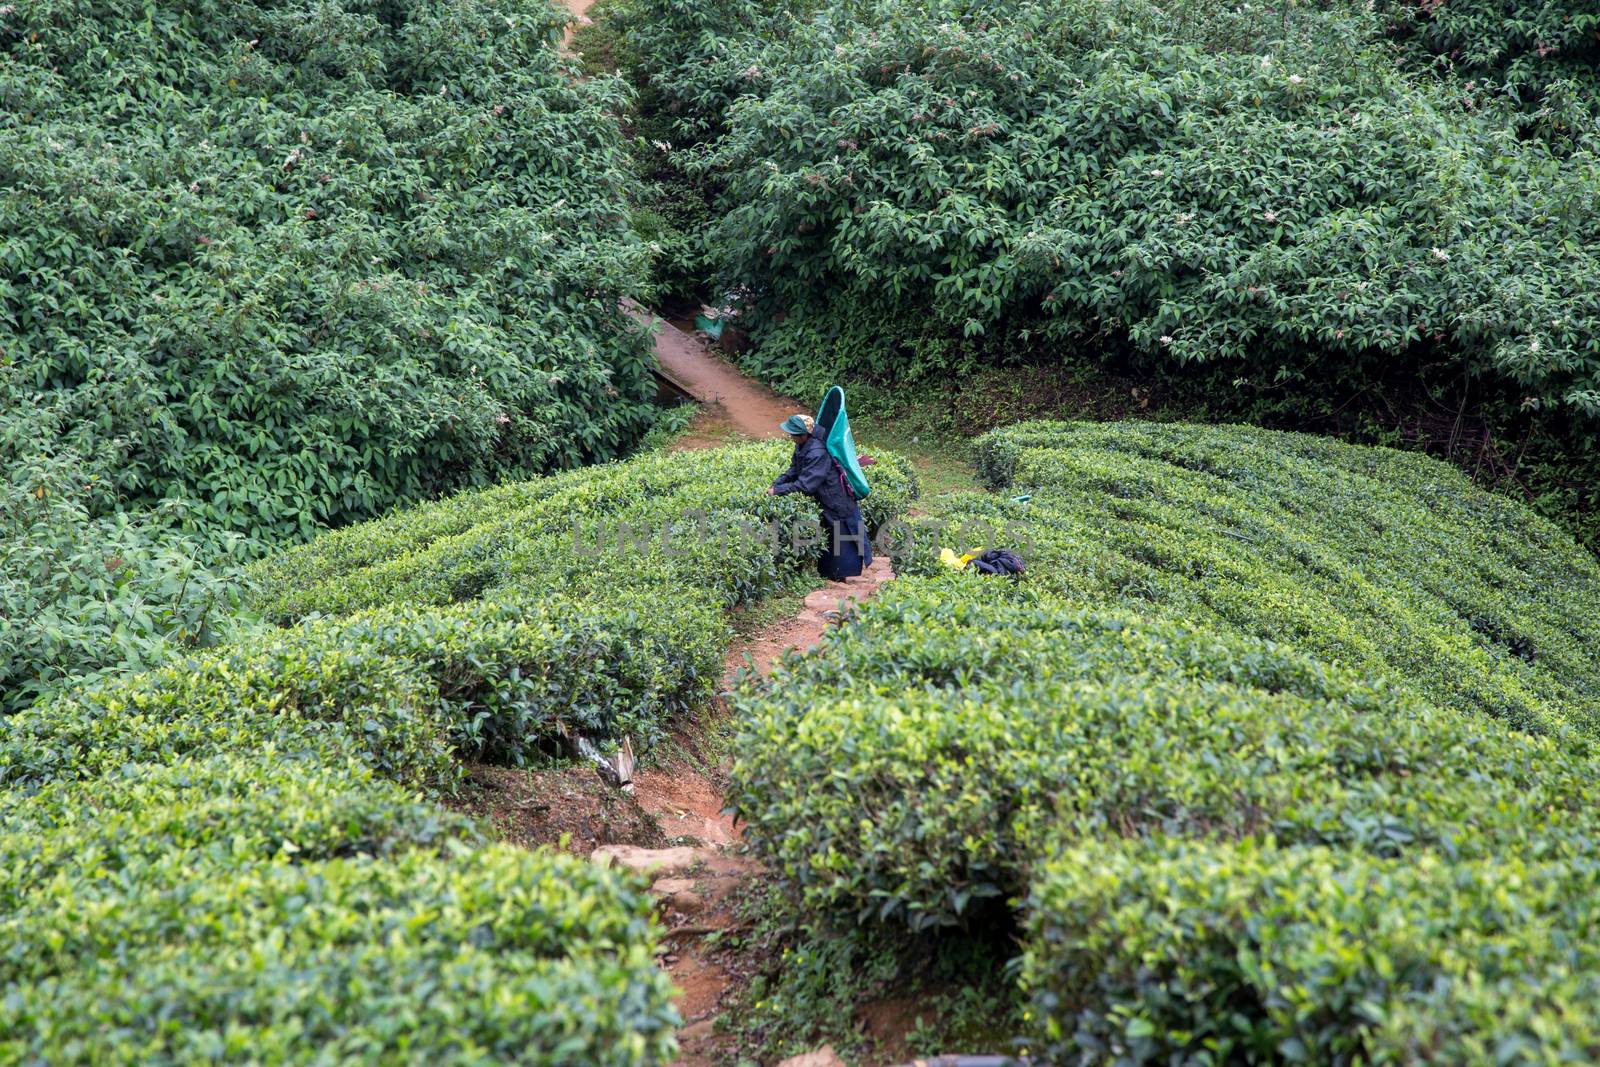 Tea plantation worker in Nuwara Eliya, Sri Lanka by oliverfoerstner